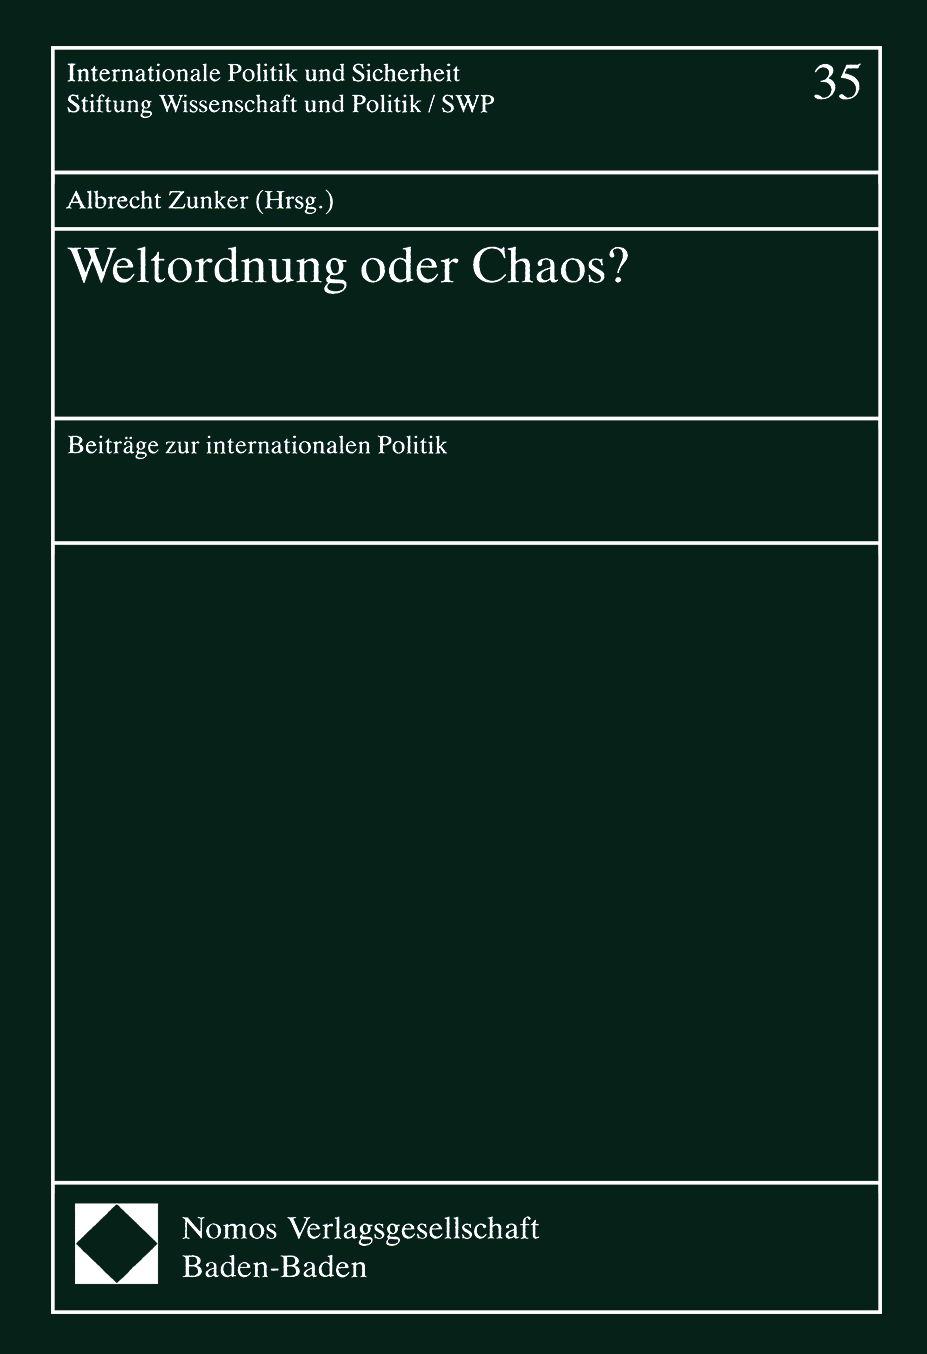 Weltordnung oder Chaos?, vol. 35, 1993, p. 388-402;